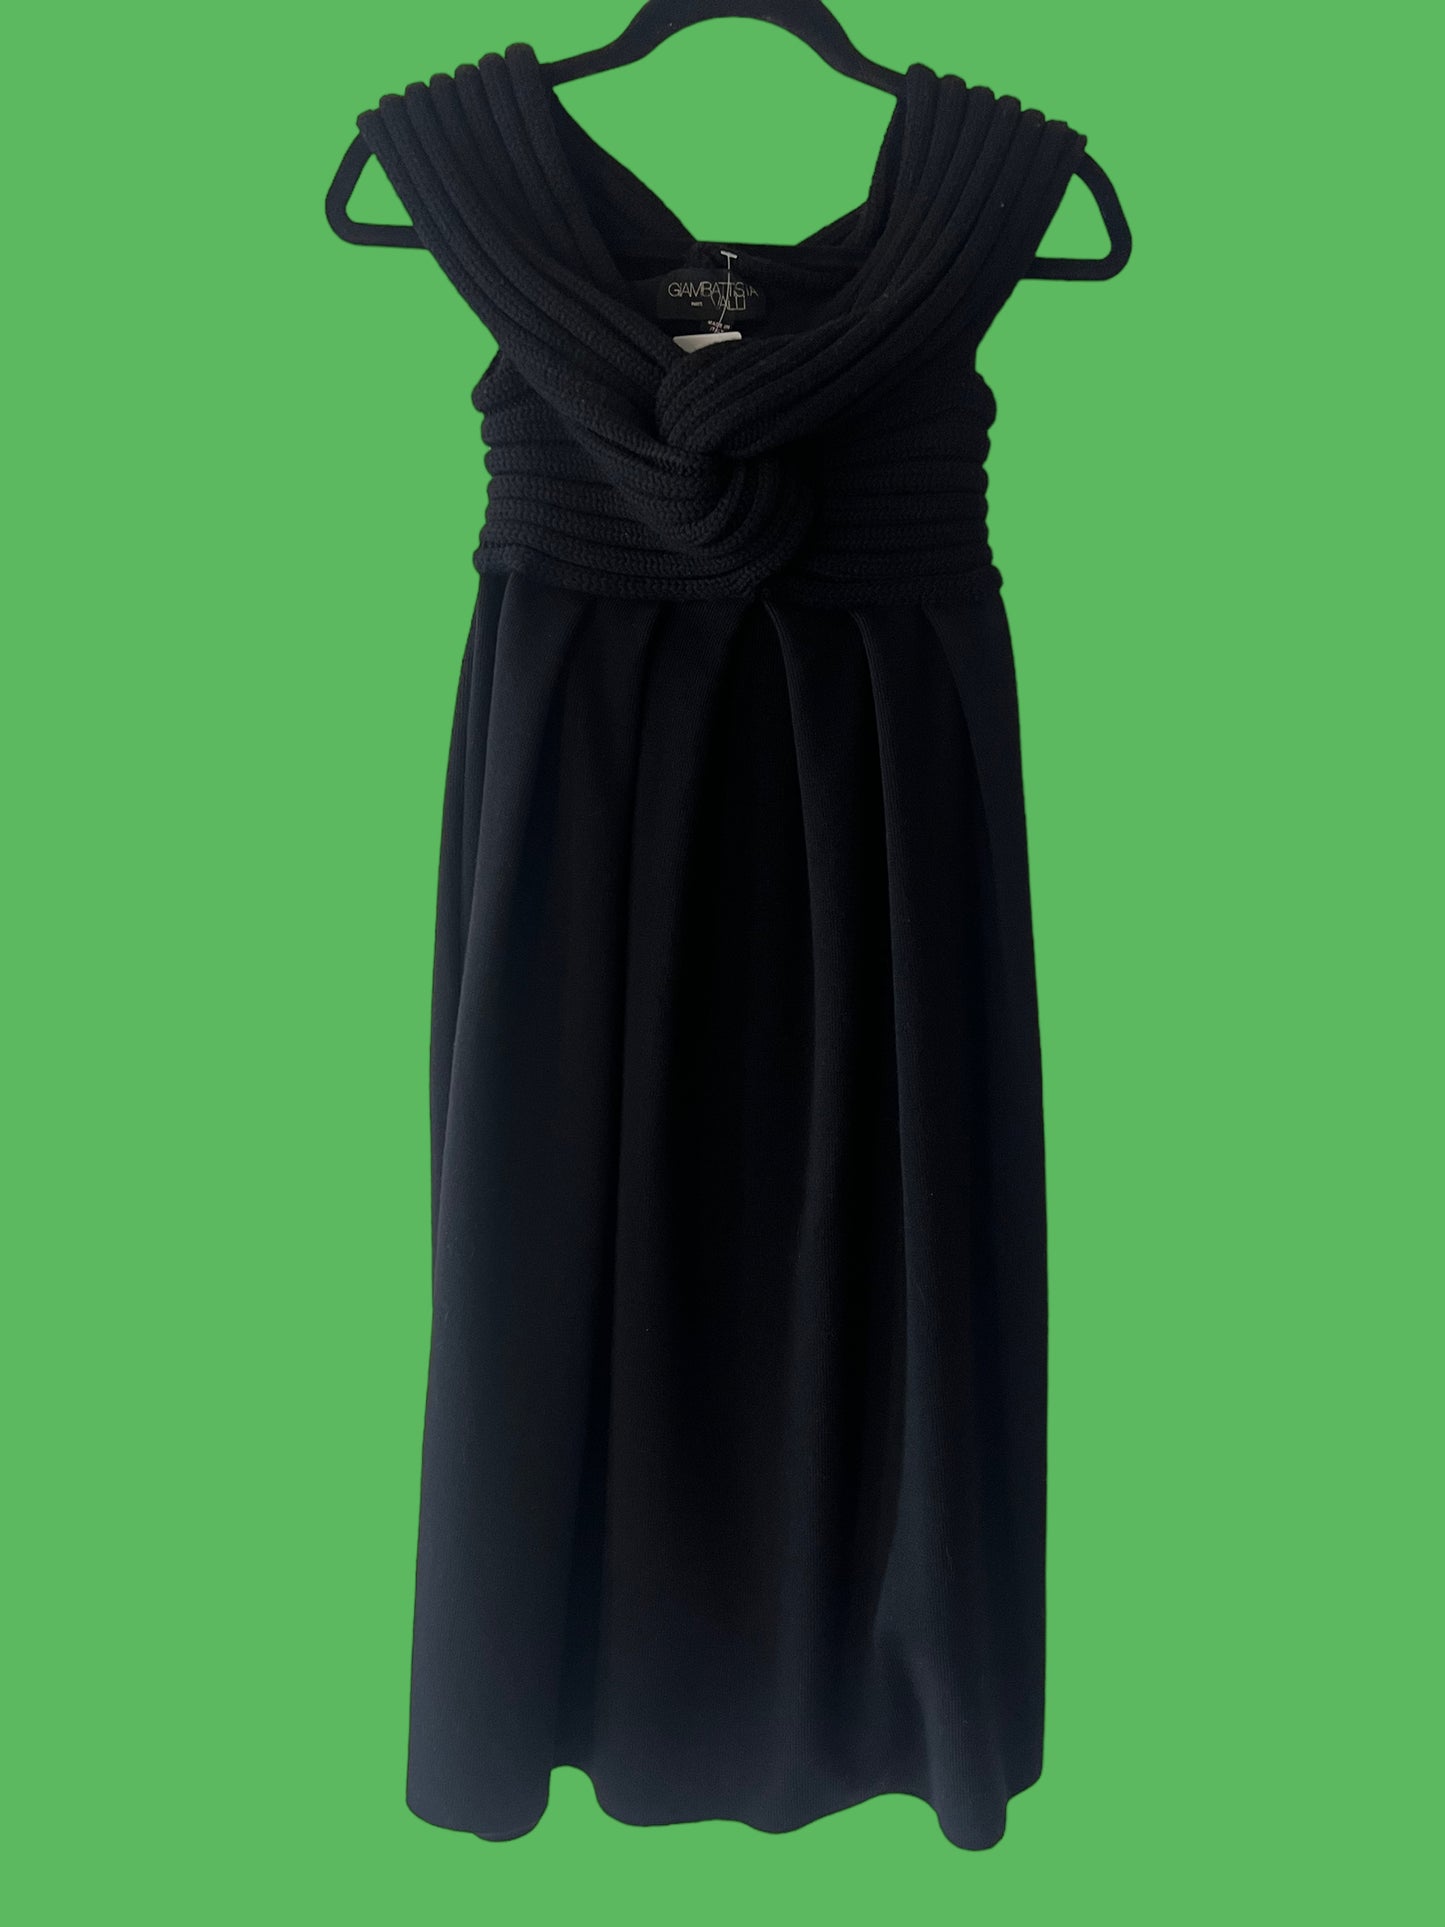 GIAMBATISTA VALLI black dress size xs